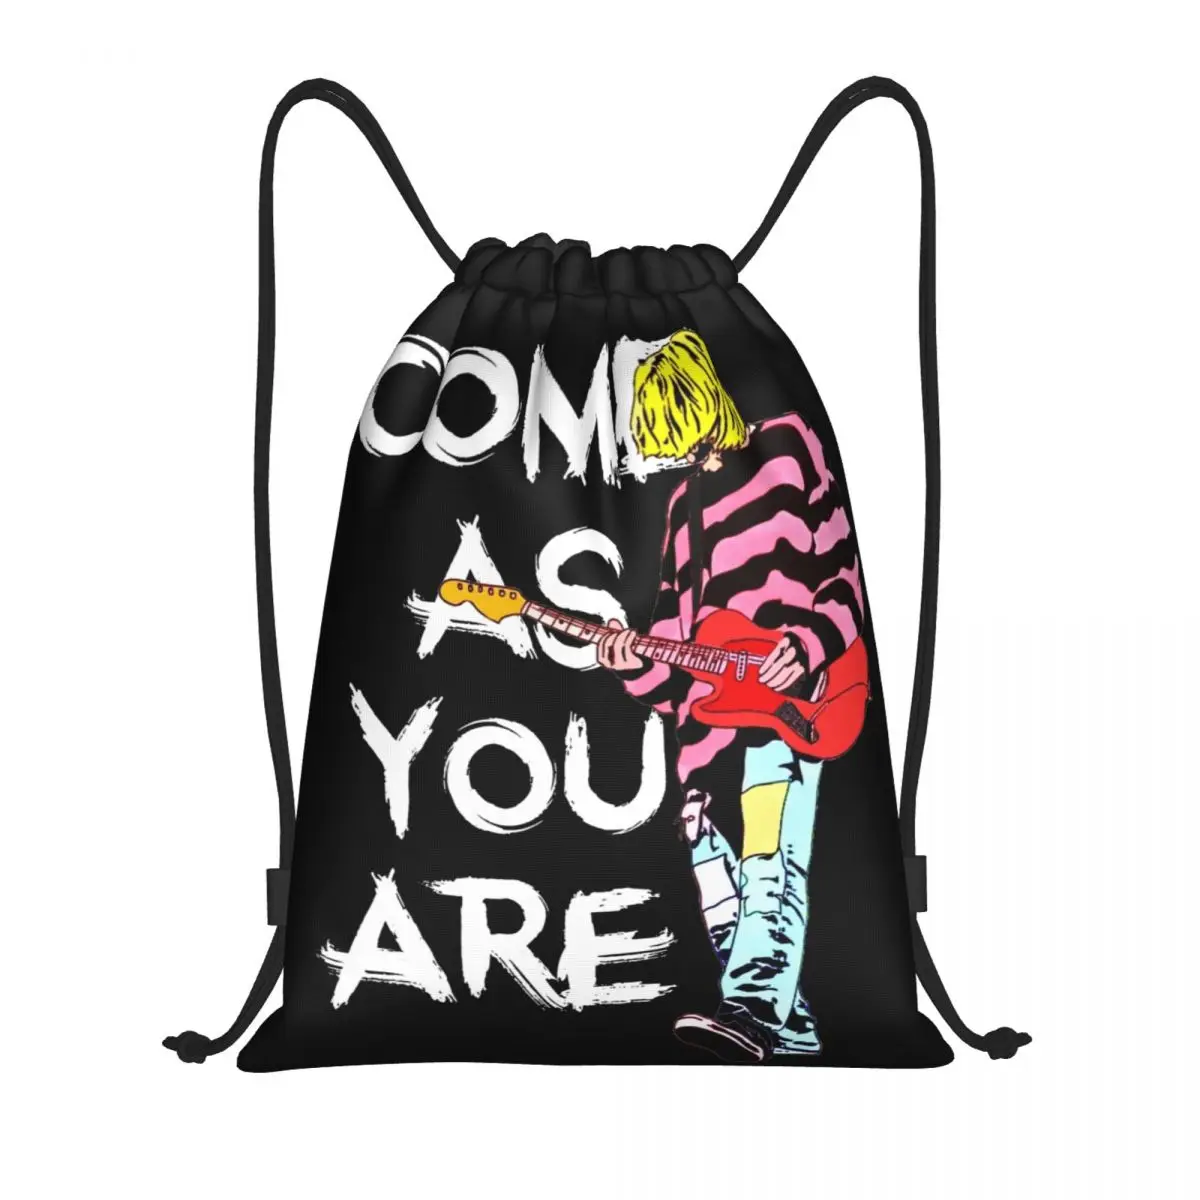 Рюкзак рок-певца Курта Кобейна на шнурке для спортзала, спортивный рюкзак Come As You Are, авоська для йоги